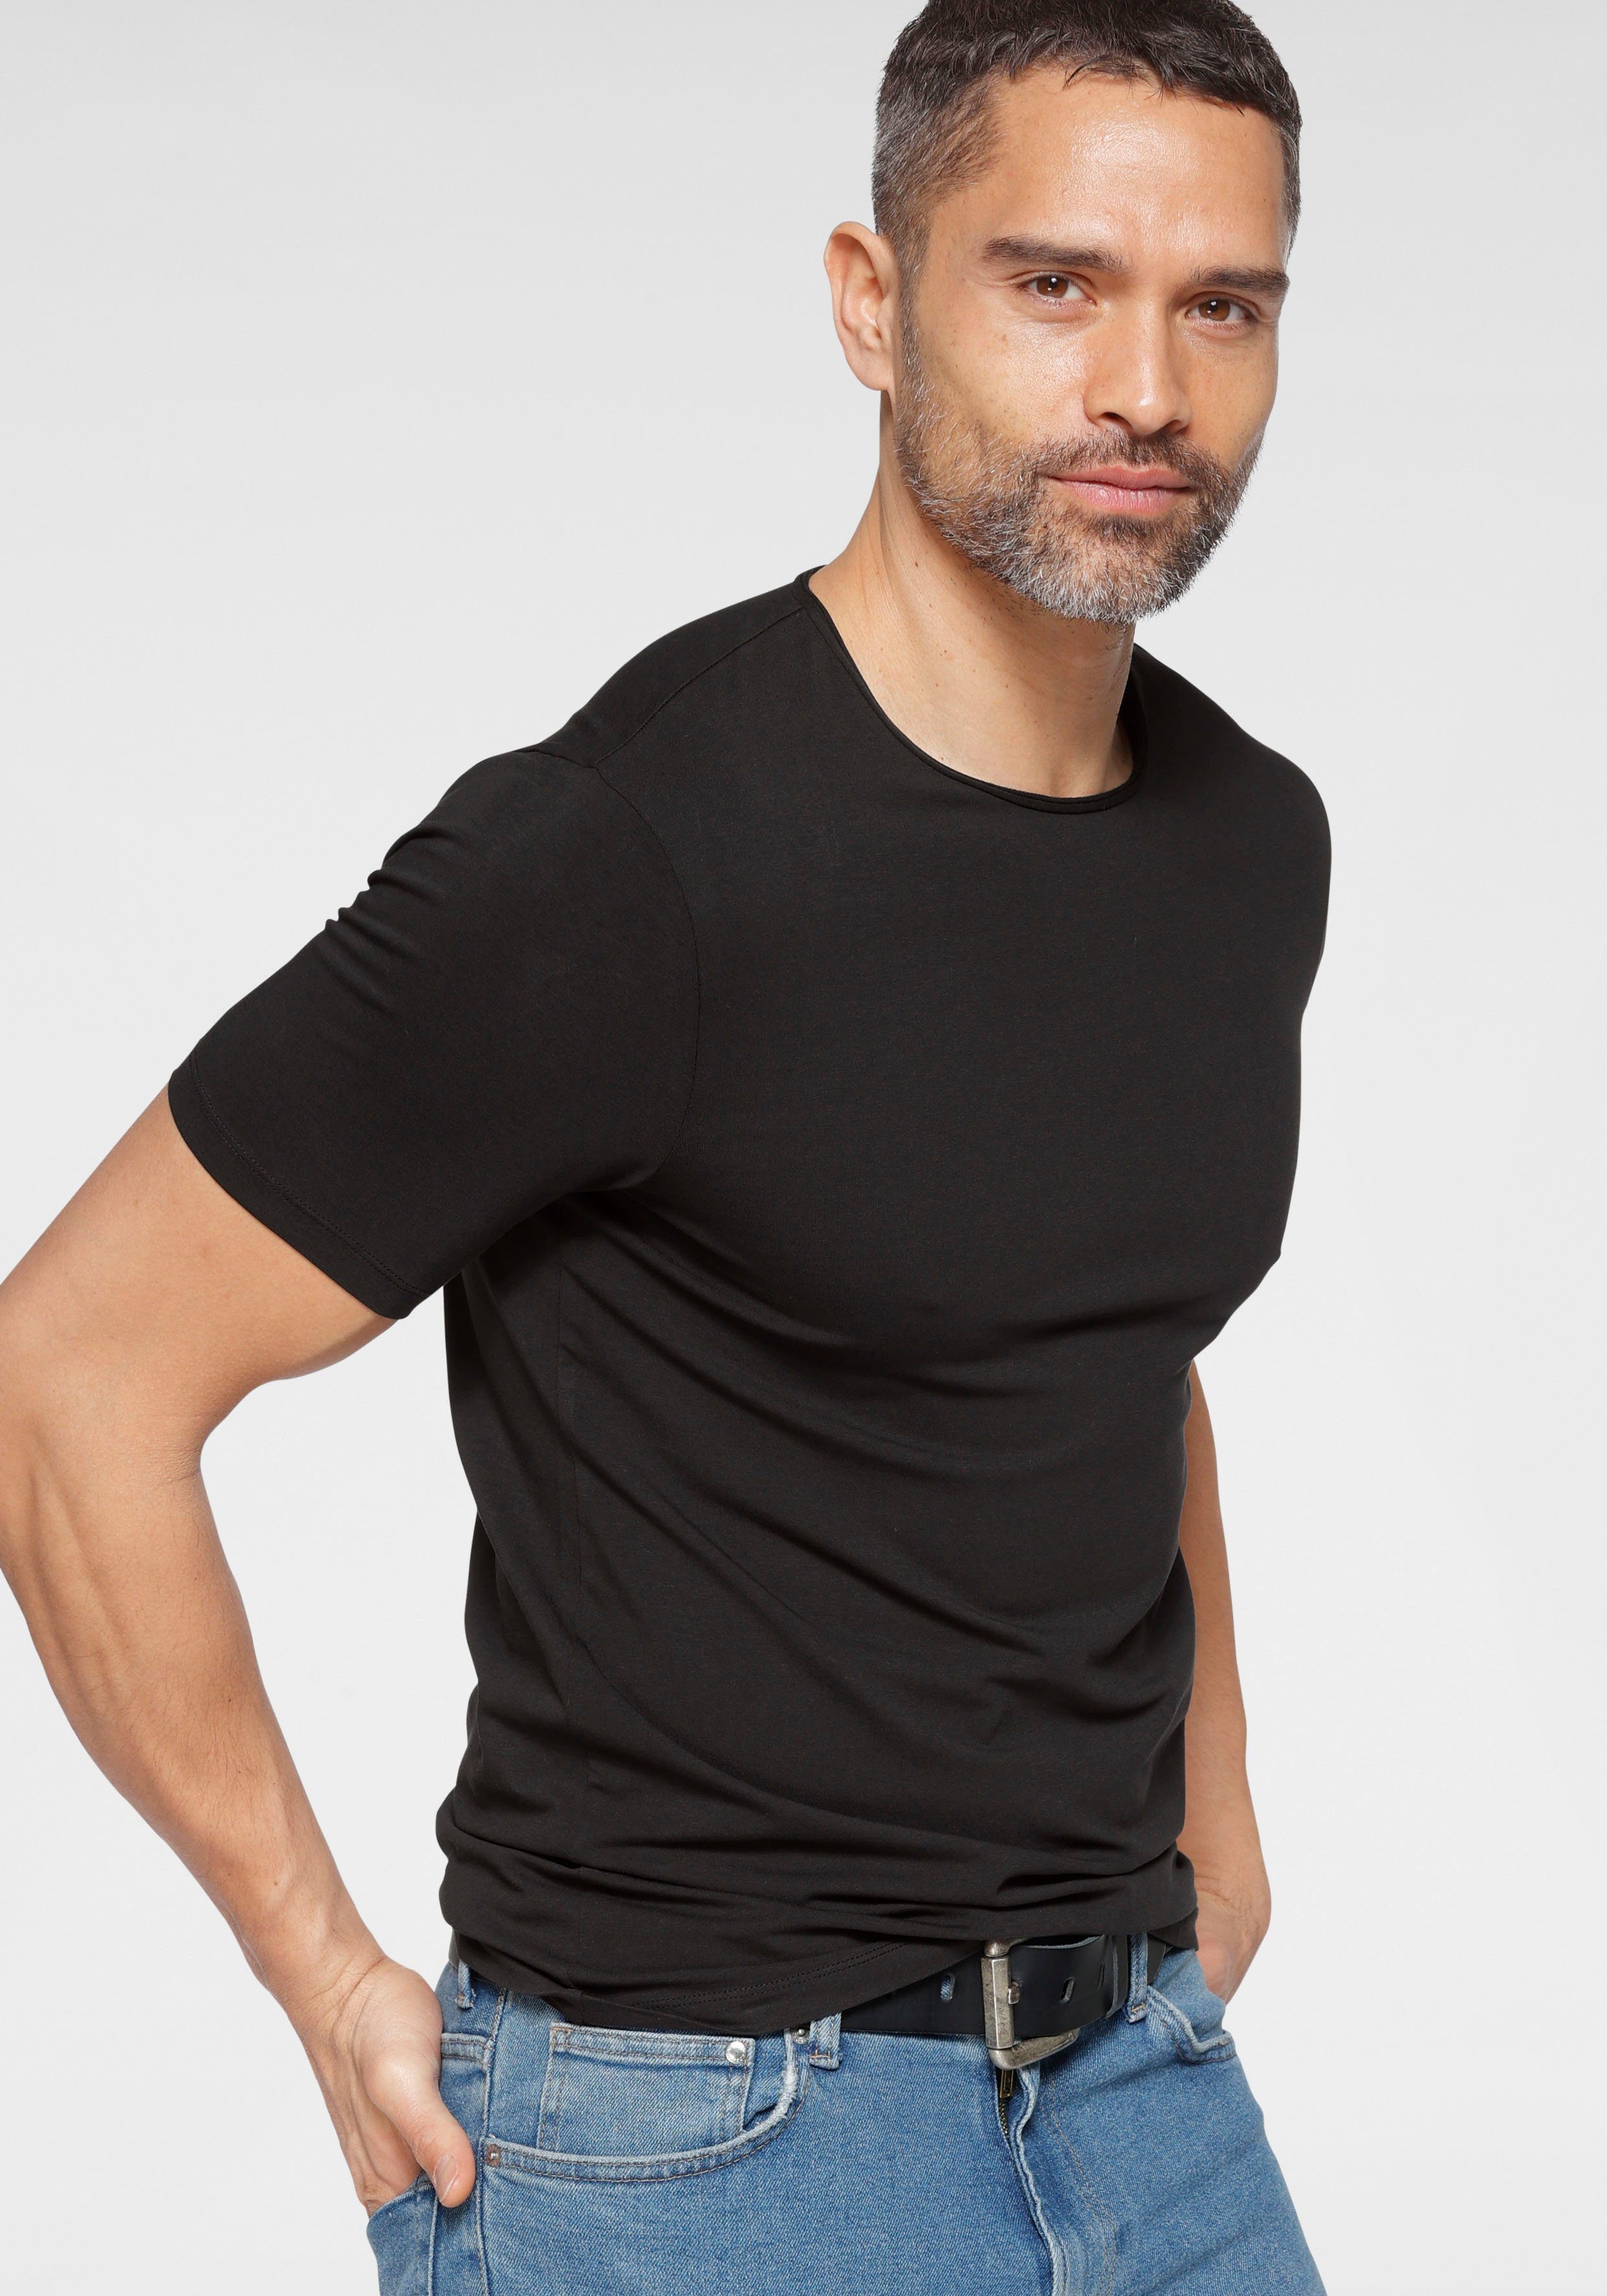 aus Five feinem body fit T-Shirt schwarz Jersey OLYMP Level